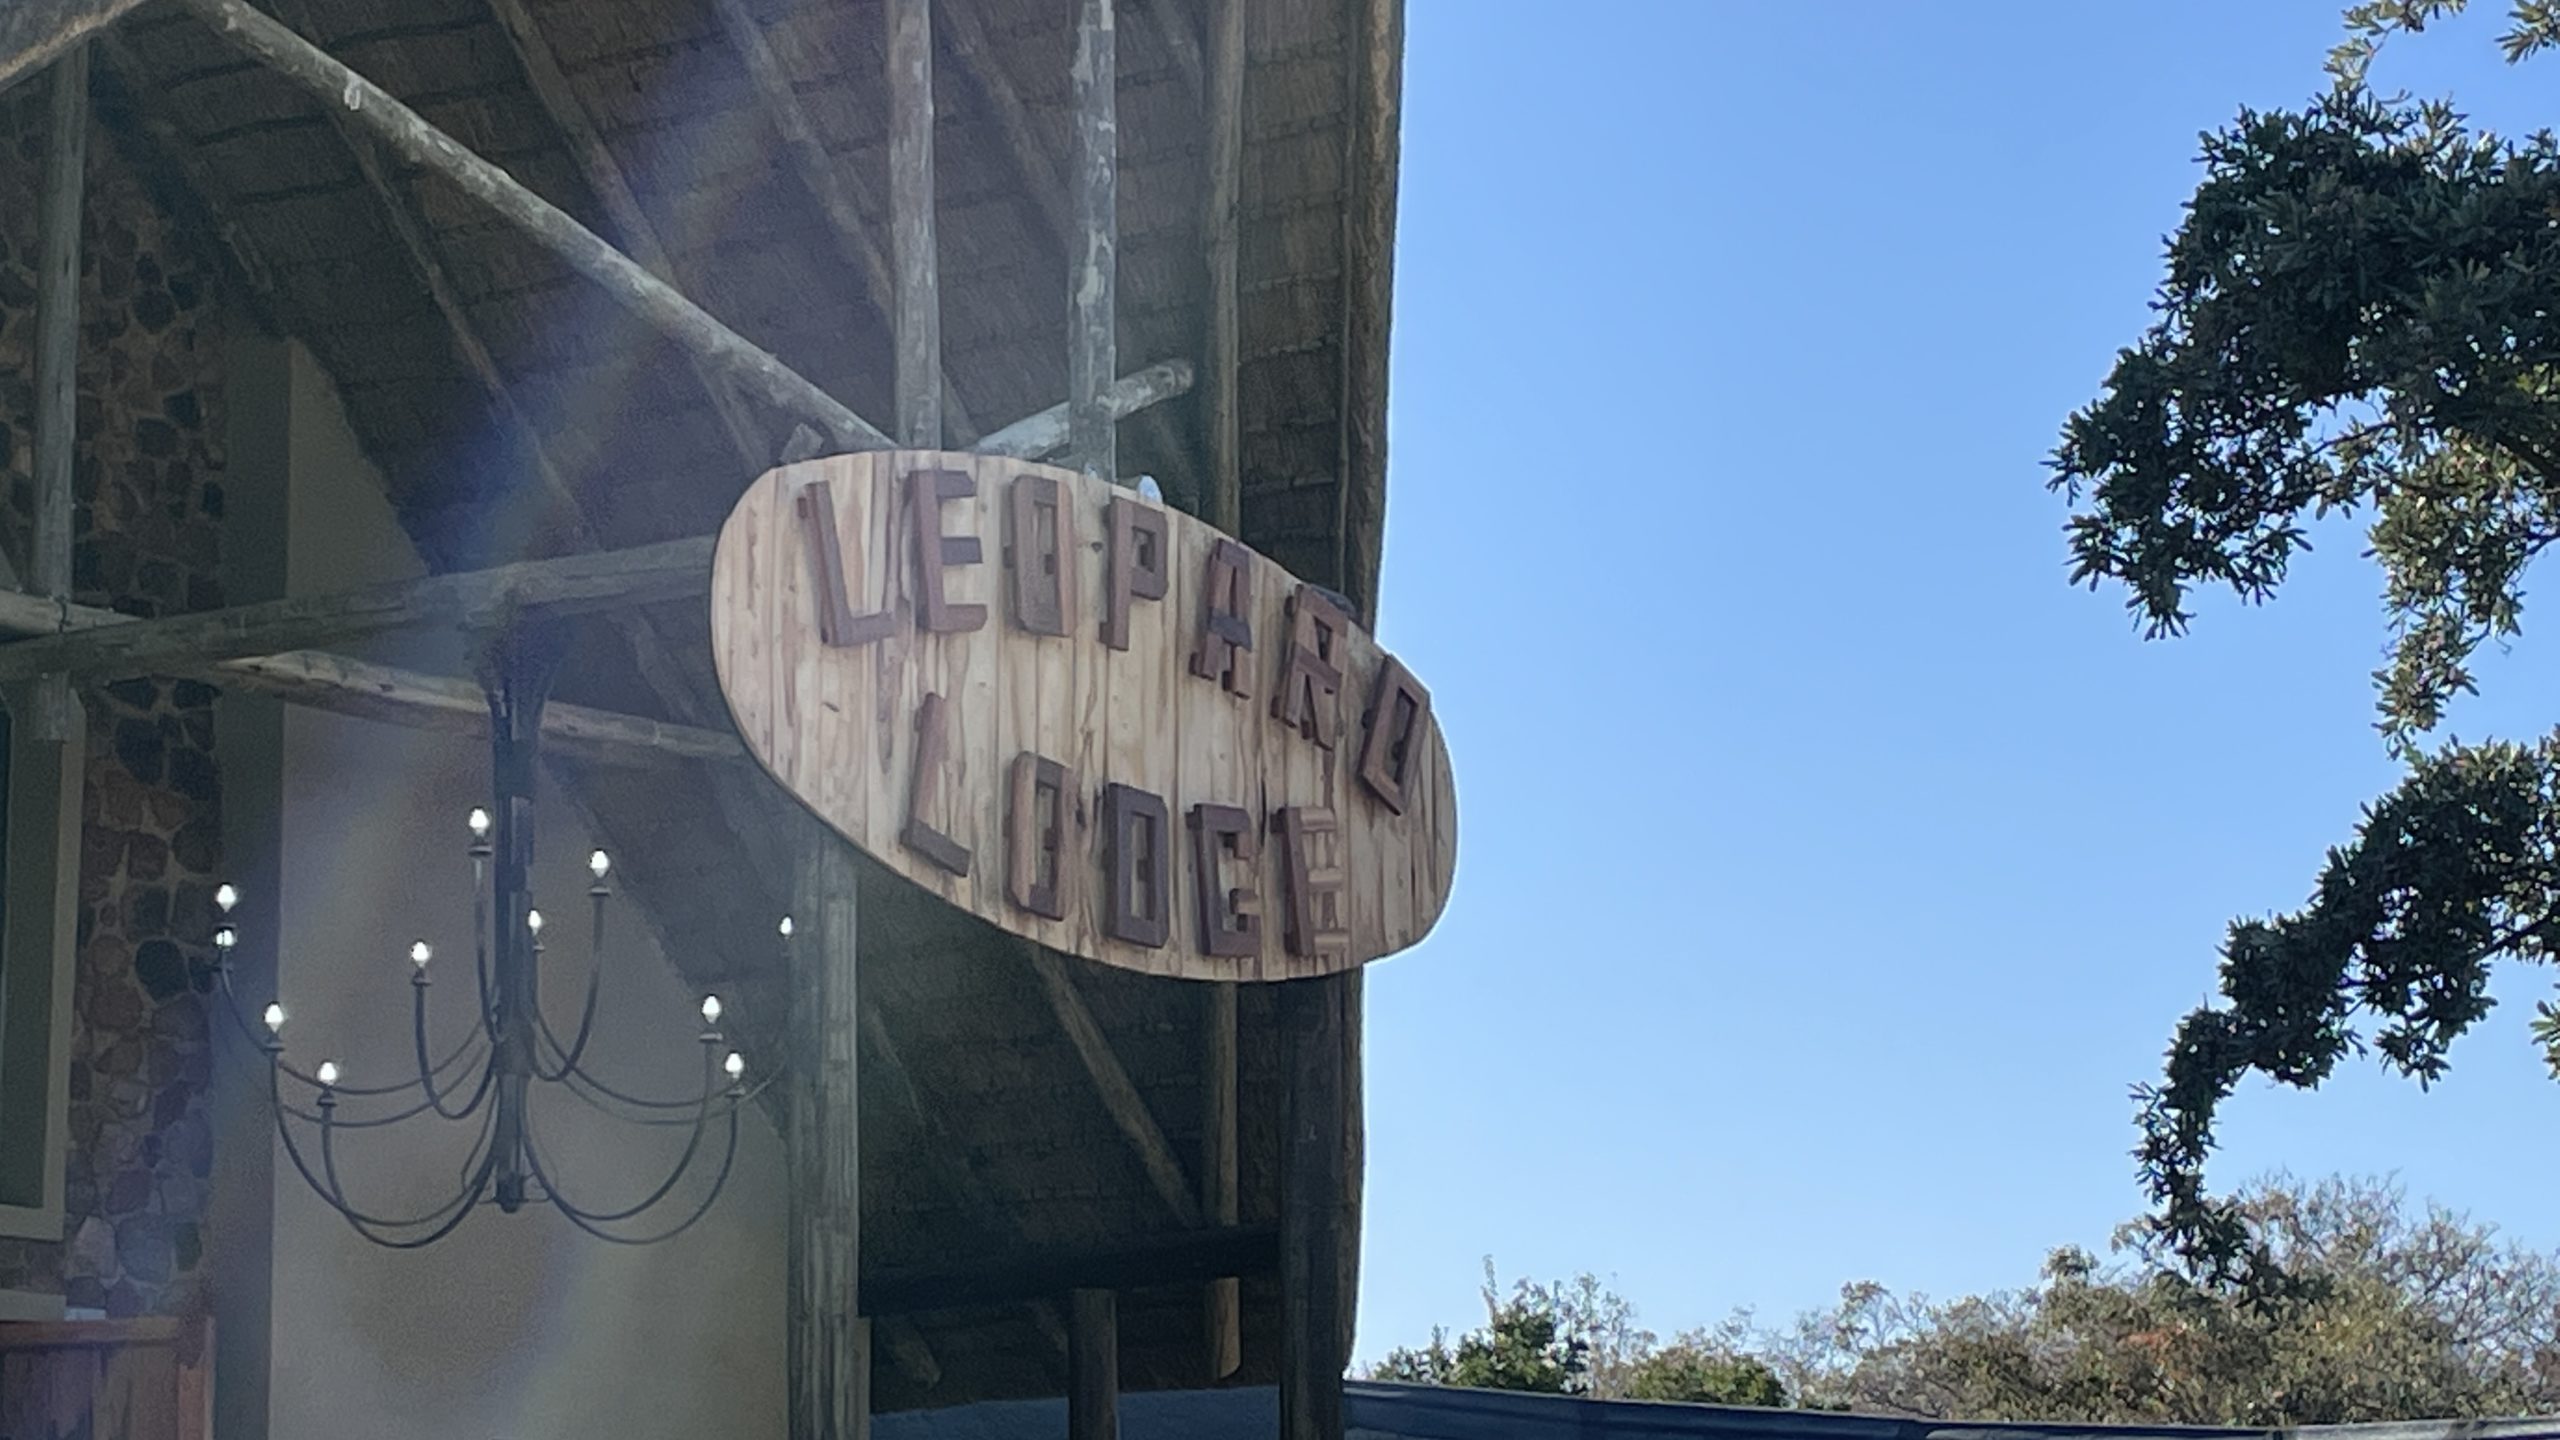 Sabatana Private Reserve Leopard Lodge Sign Entry Point Hacks by Daniel Sciberras